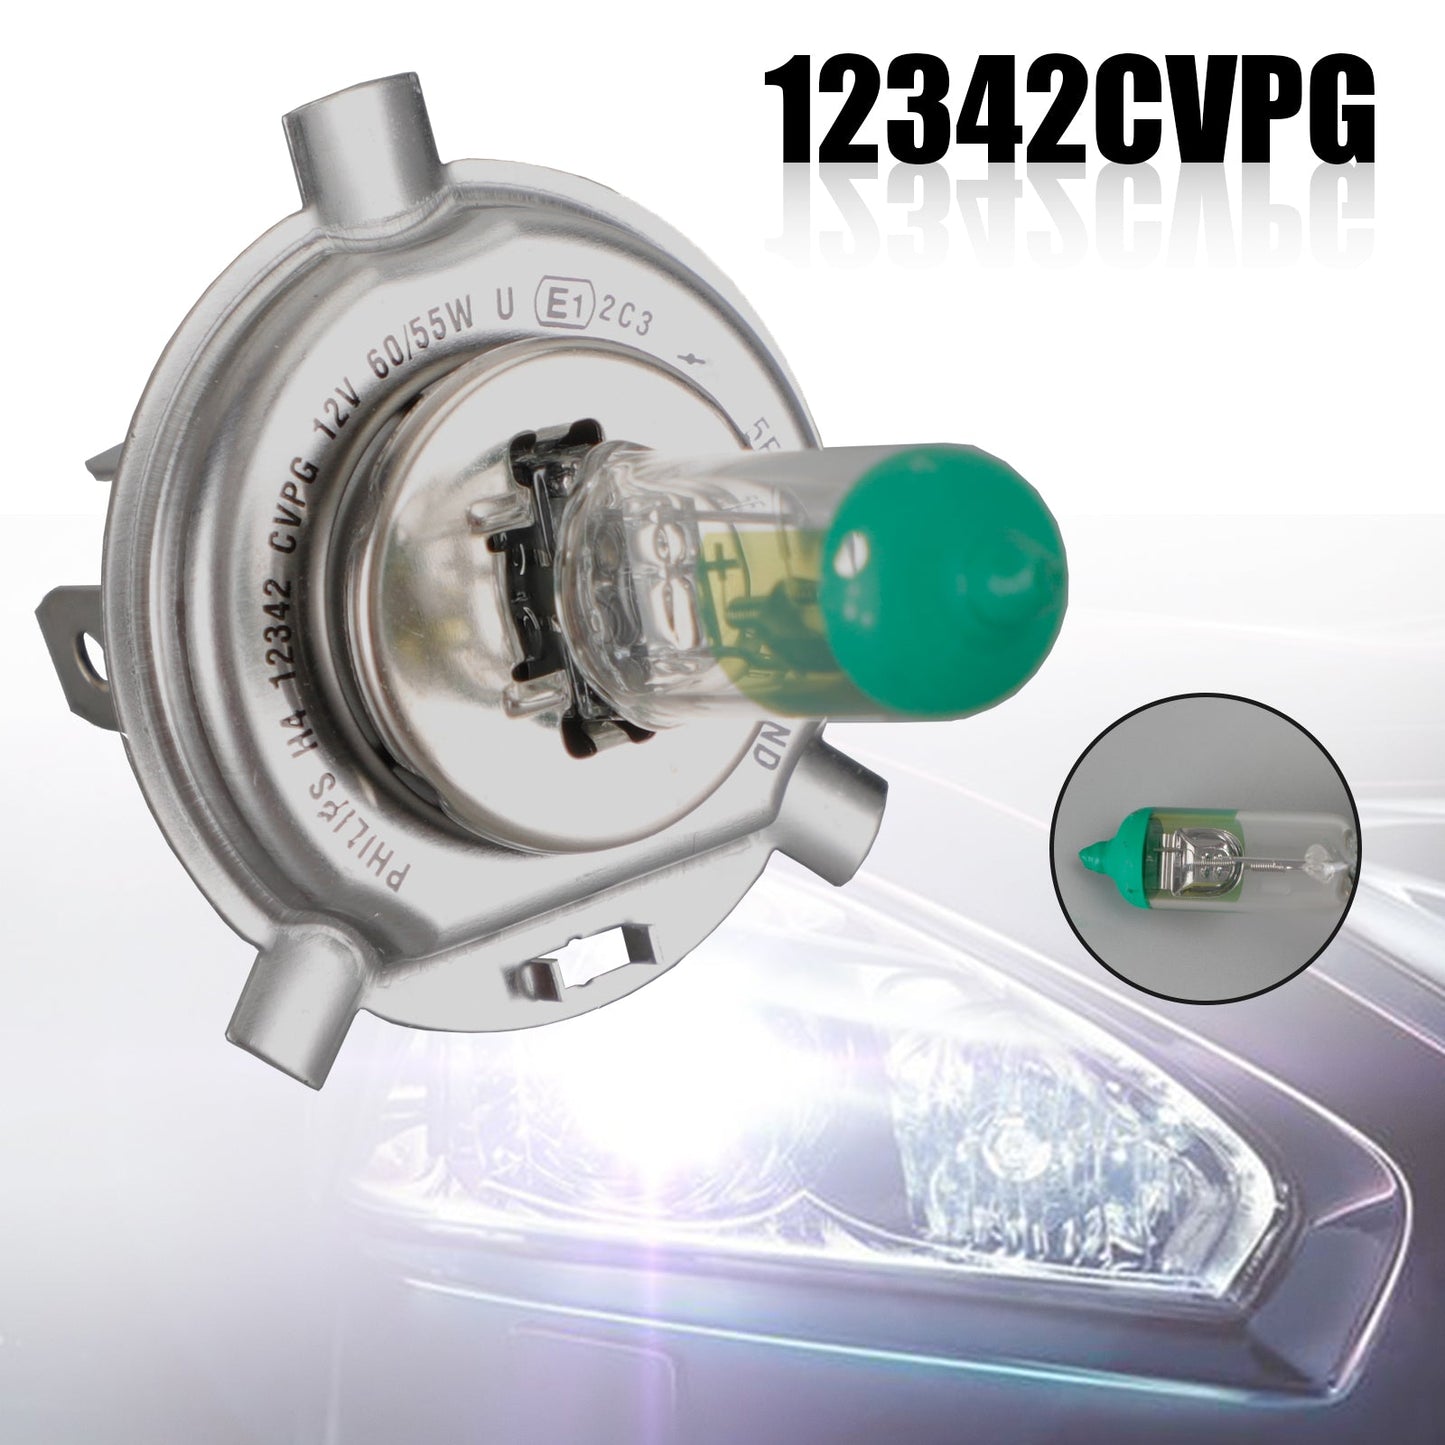 For Philips 12342CVPG Car Standard Halogen Headlight H4 12V60/55W P43t